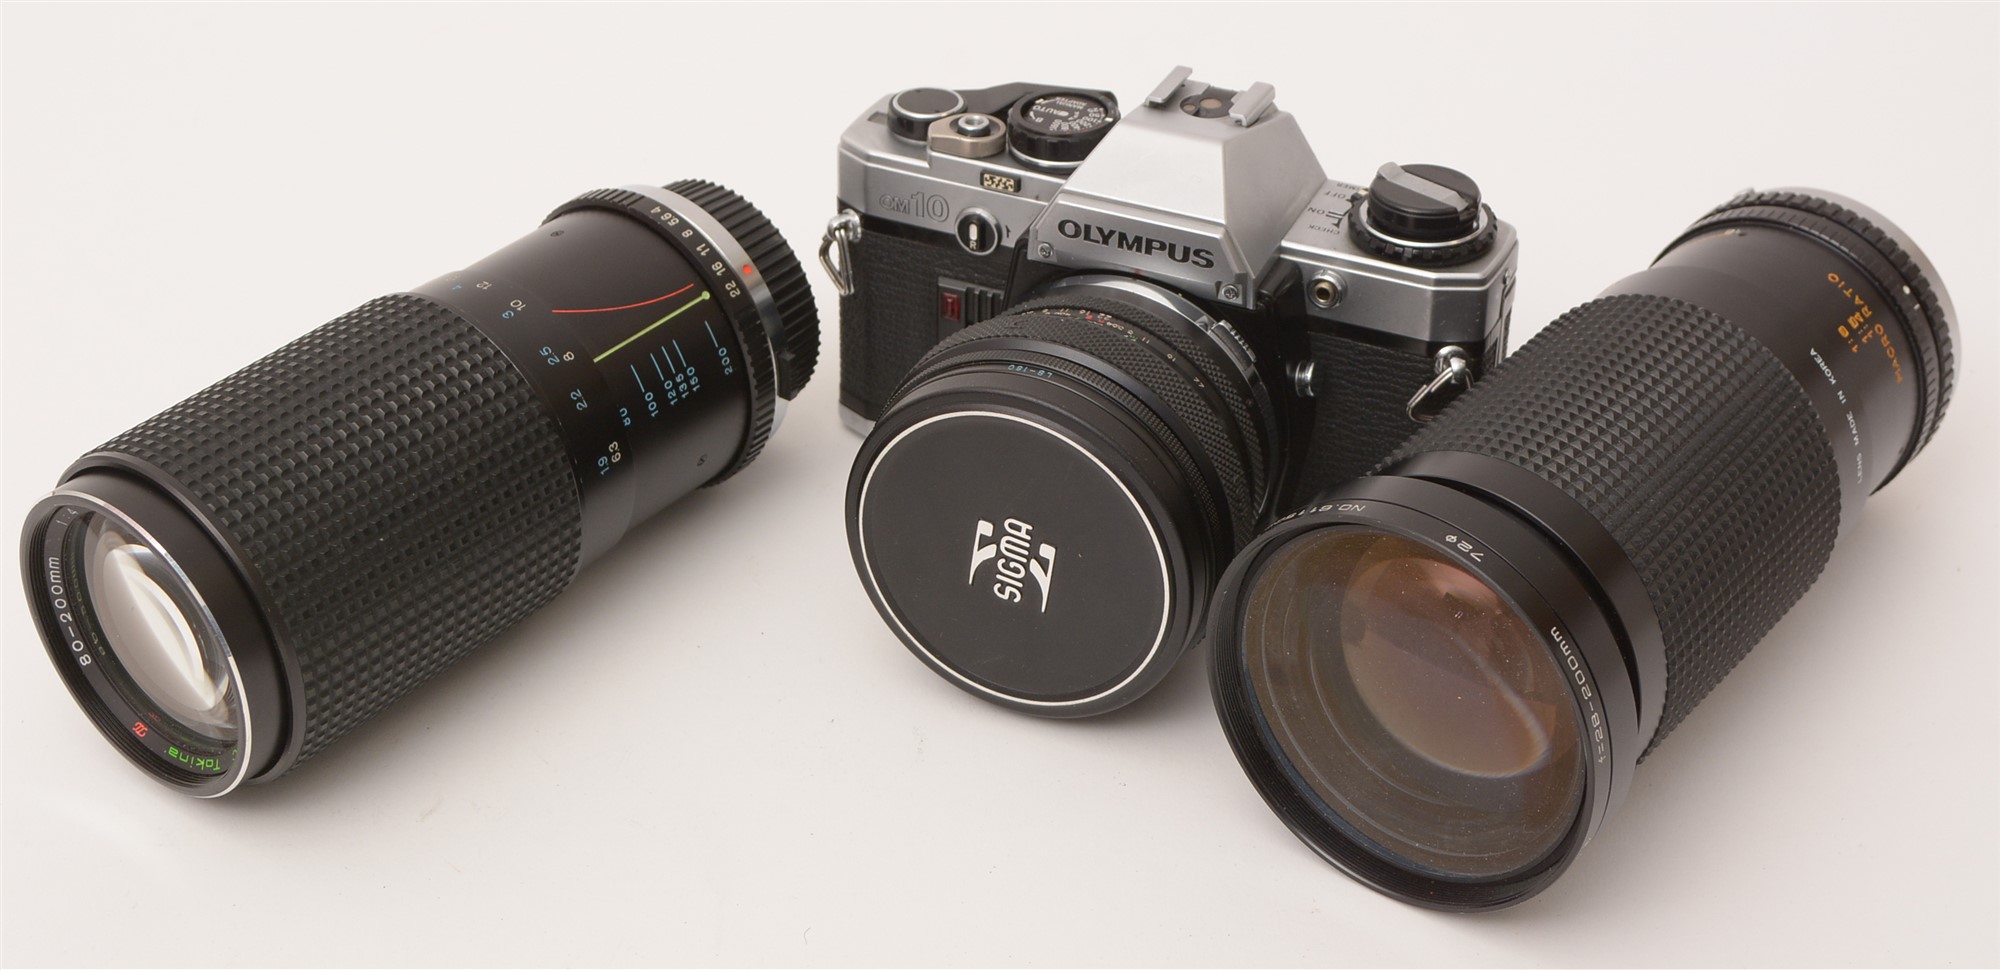 An Olympus camera and various lenses.